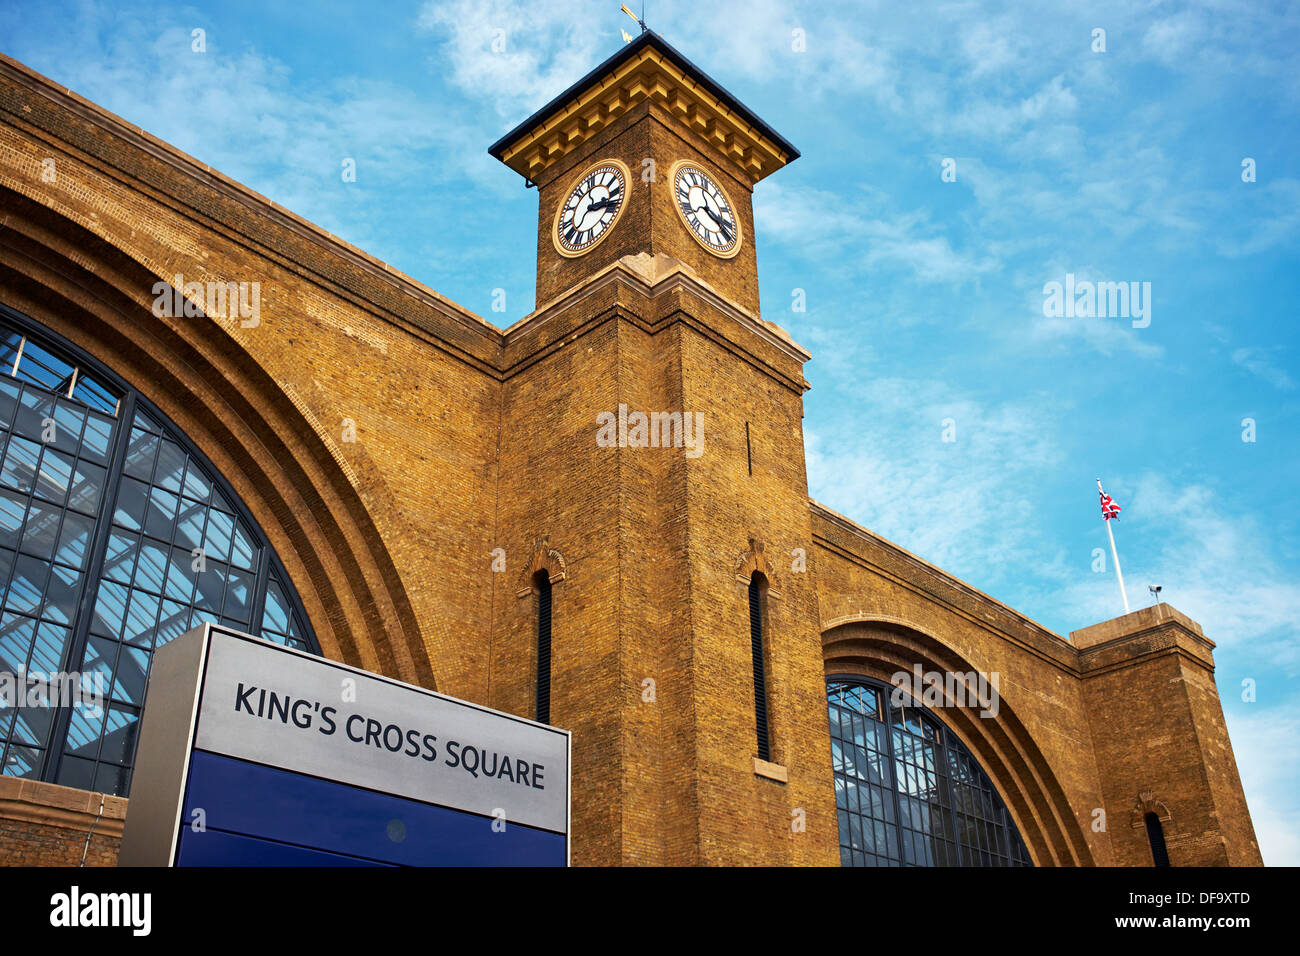 King's Cross Square, King's Cross Station, London, UK. Stock Photo